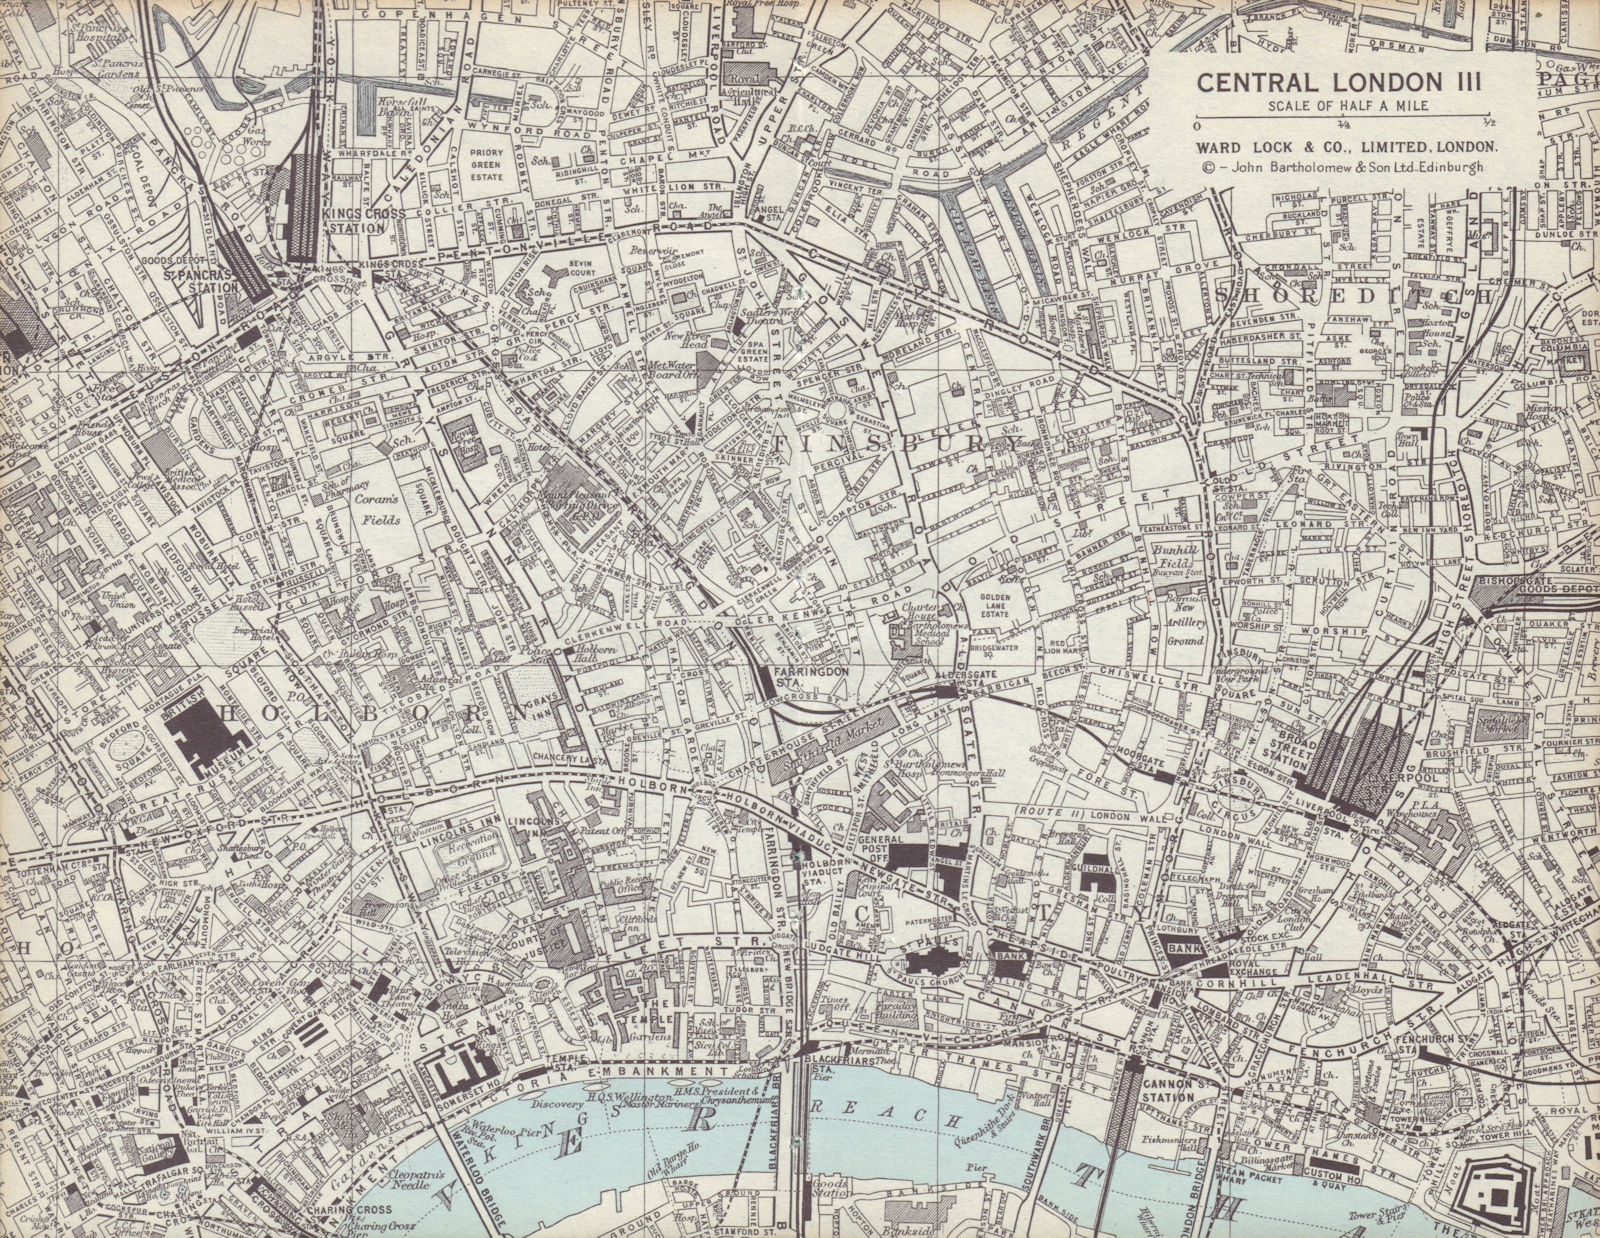 Central London 3. Holborn City Shoreditch Islington West End. WARD LOCK 1970 map